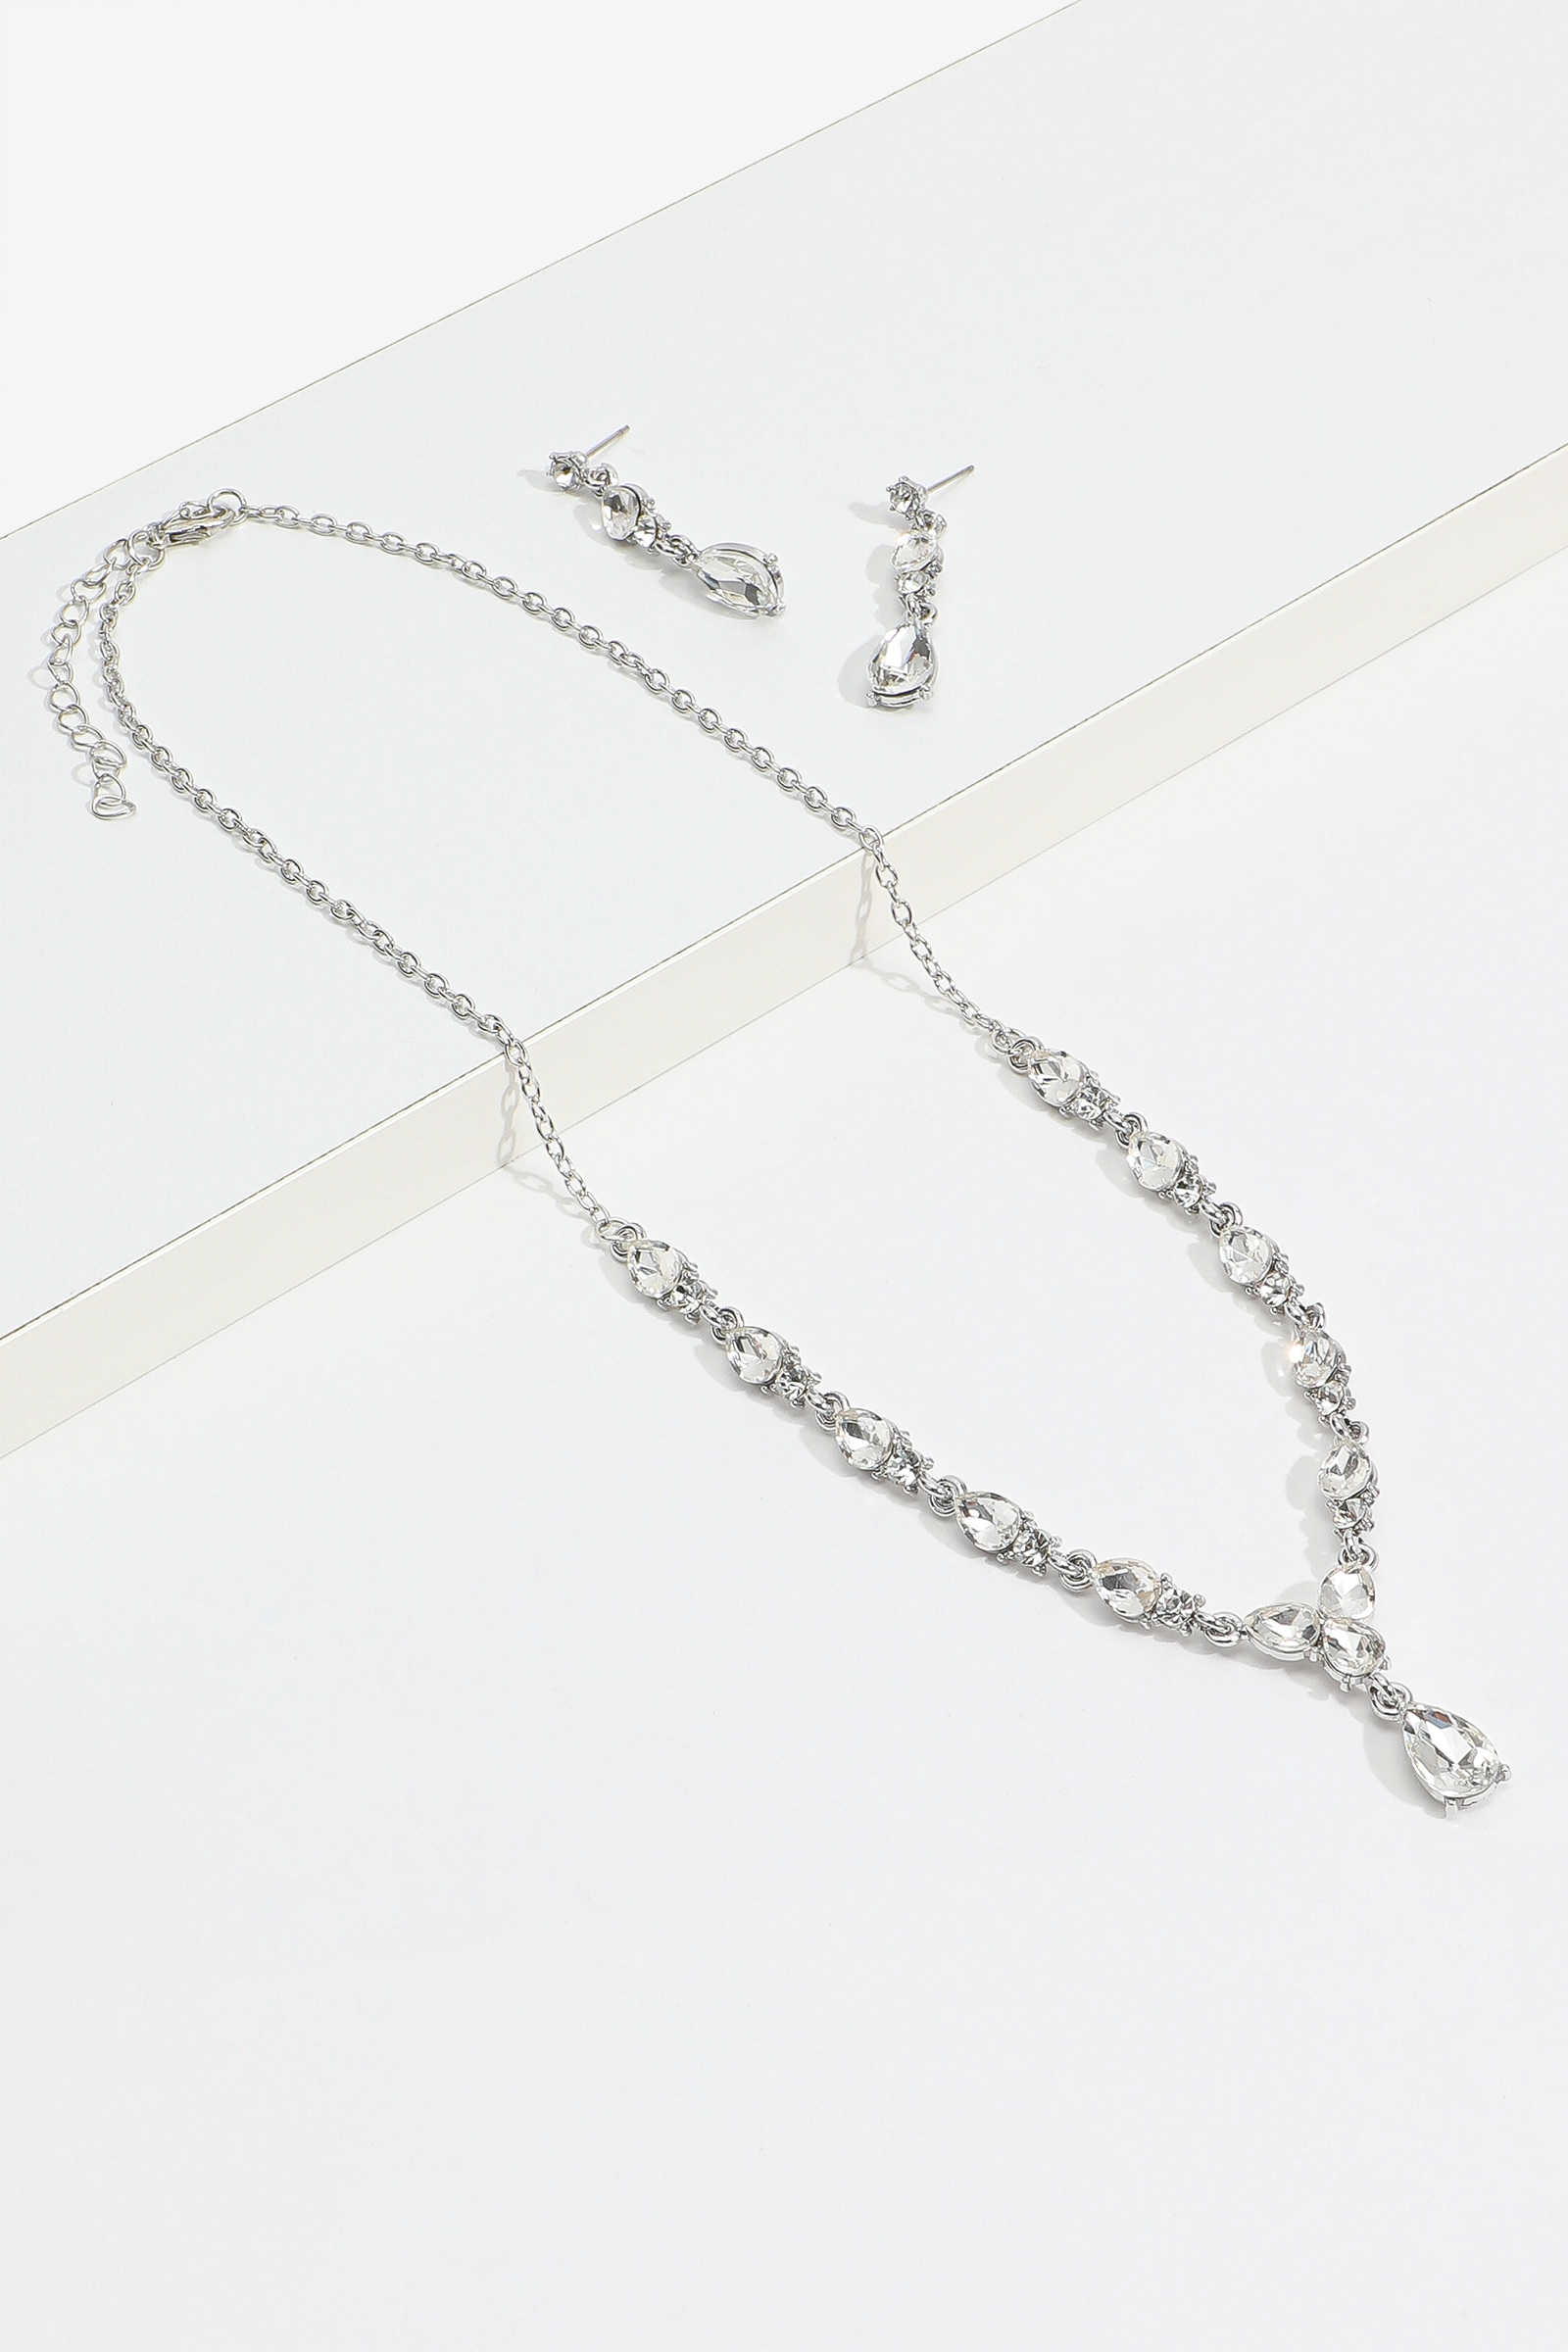 Ardene Gemstone Necklace & Earring Set in Silver | Stainless Steel